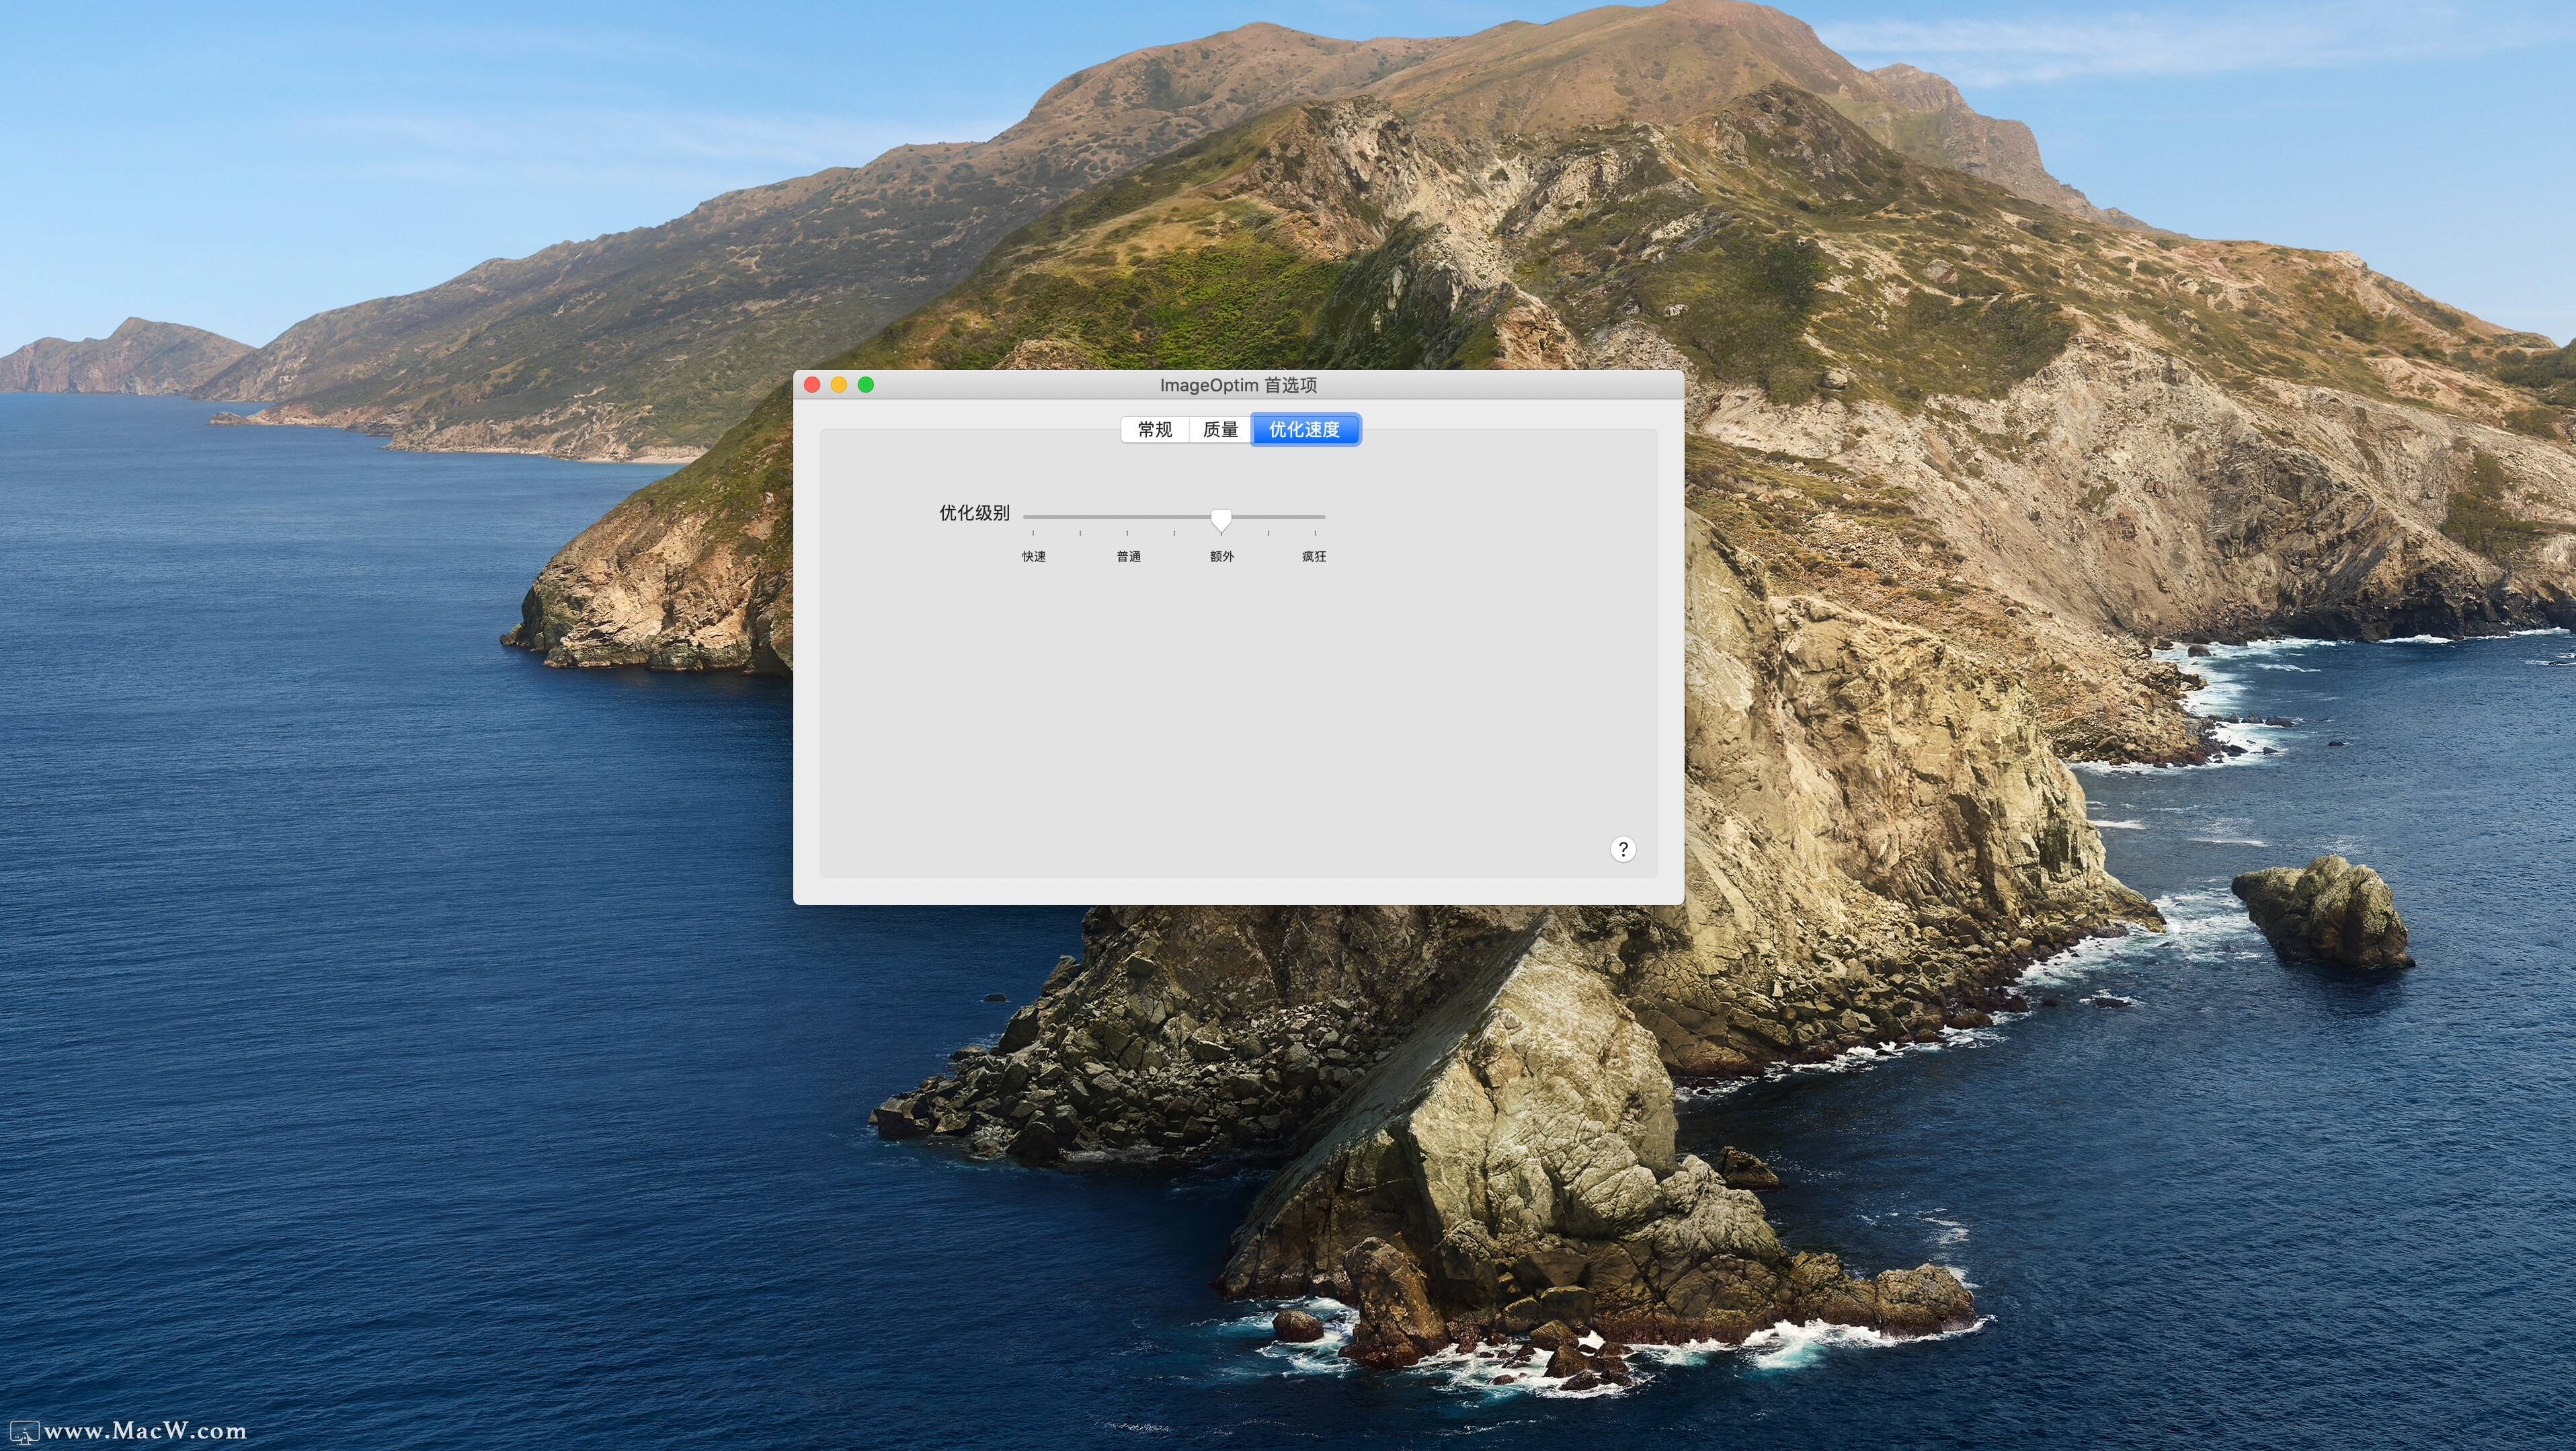 JPEGmini Pro Mac(图片无损压缩工具)激活版 - 哔哩哔哩